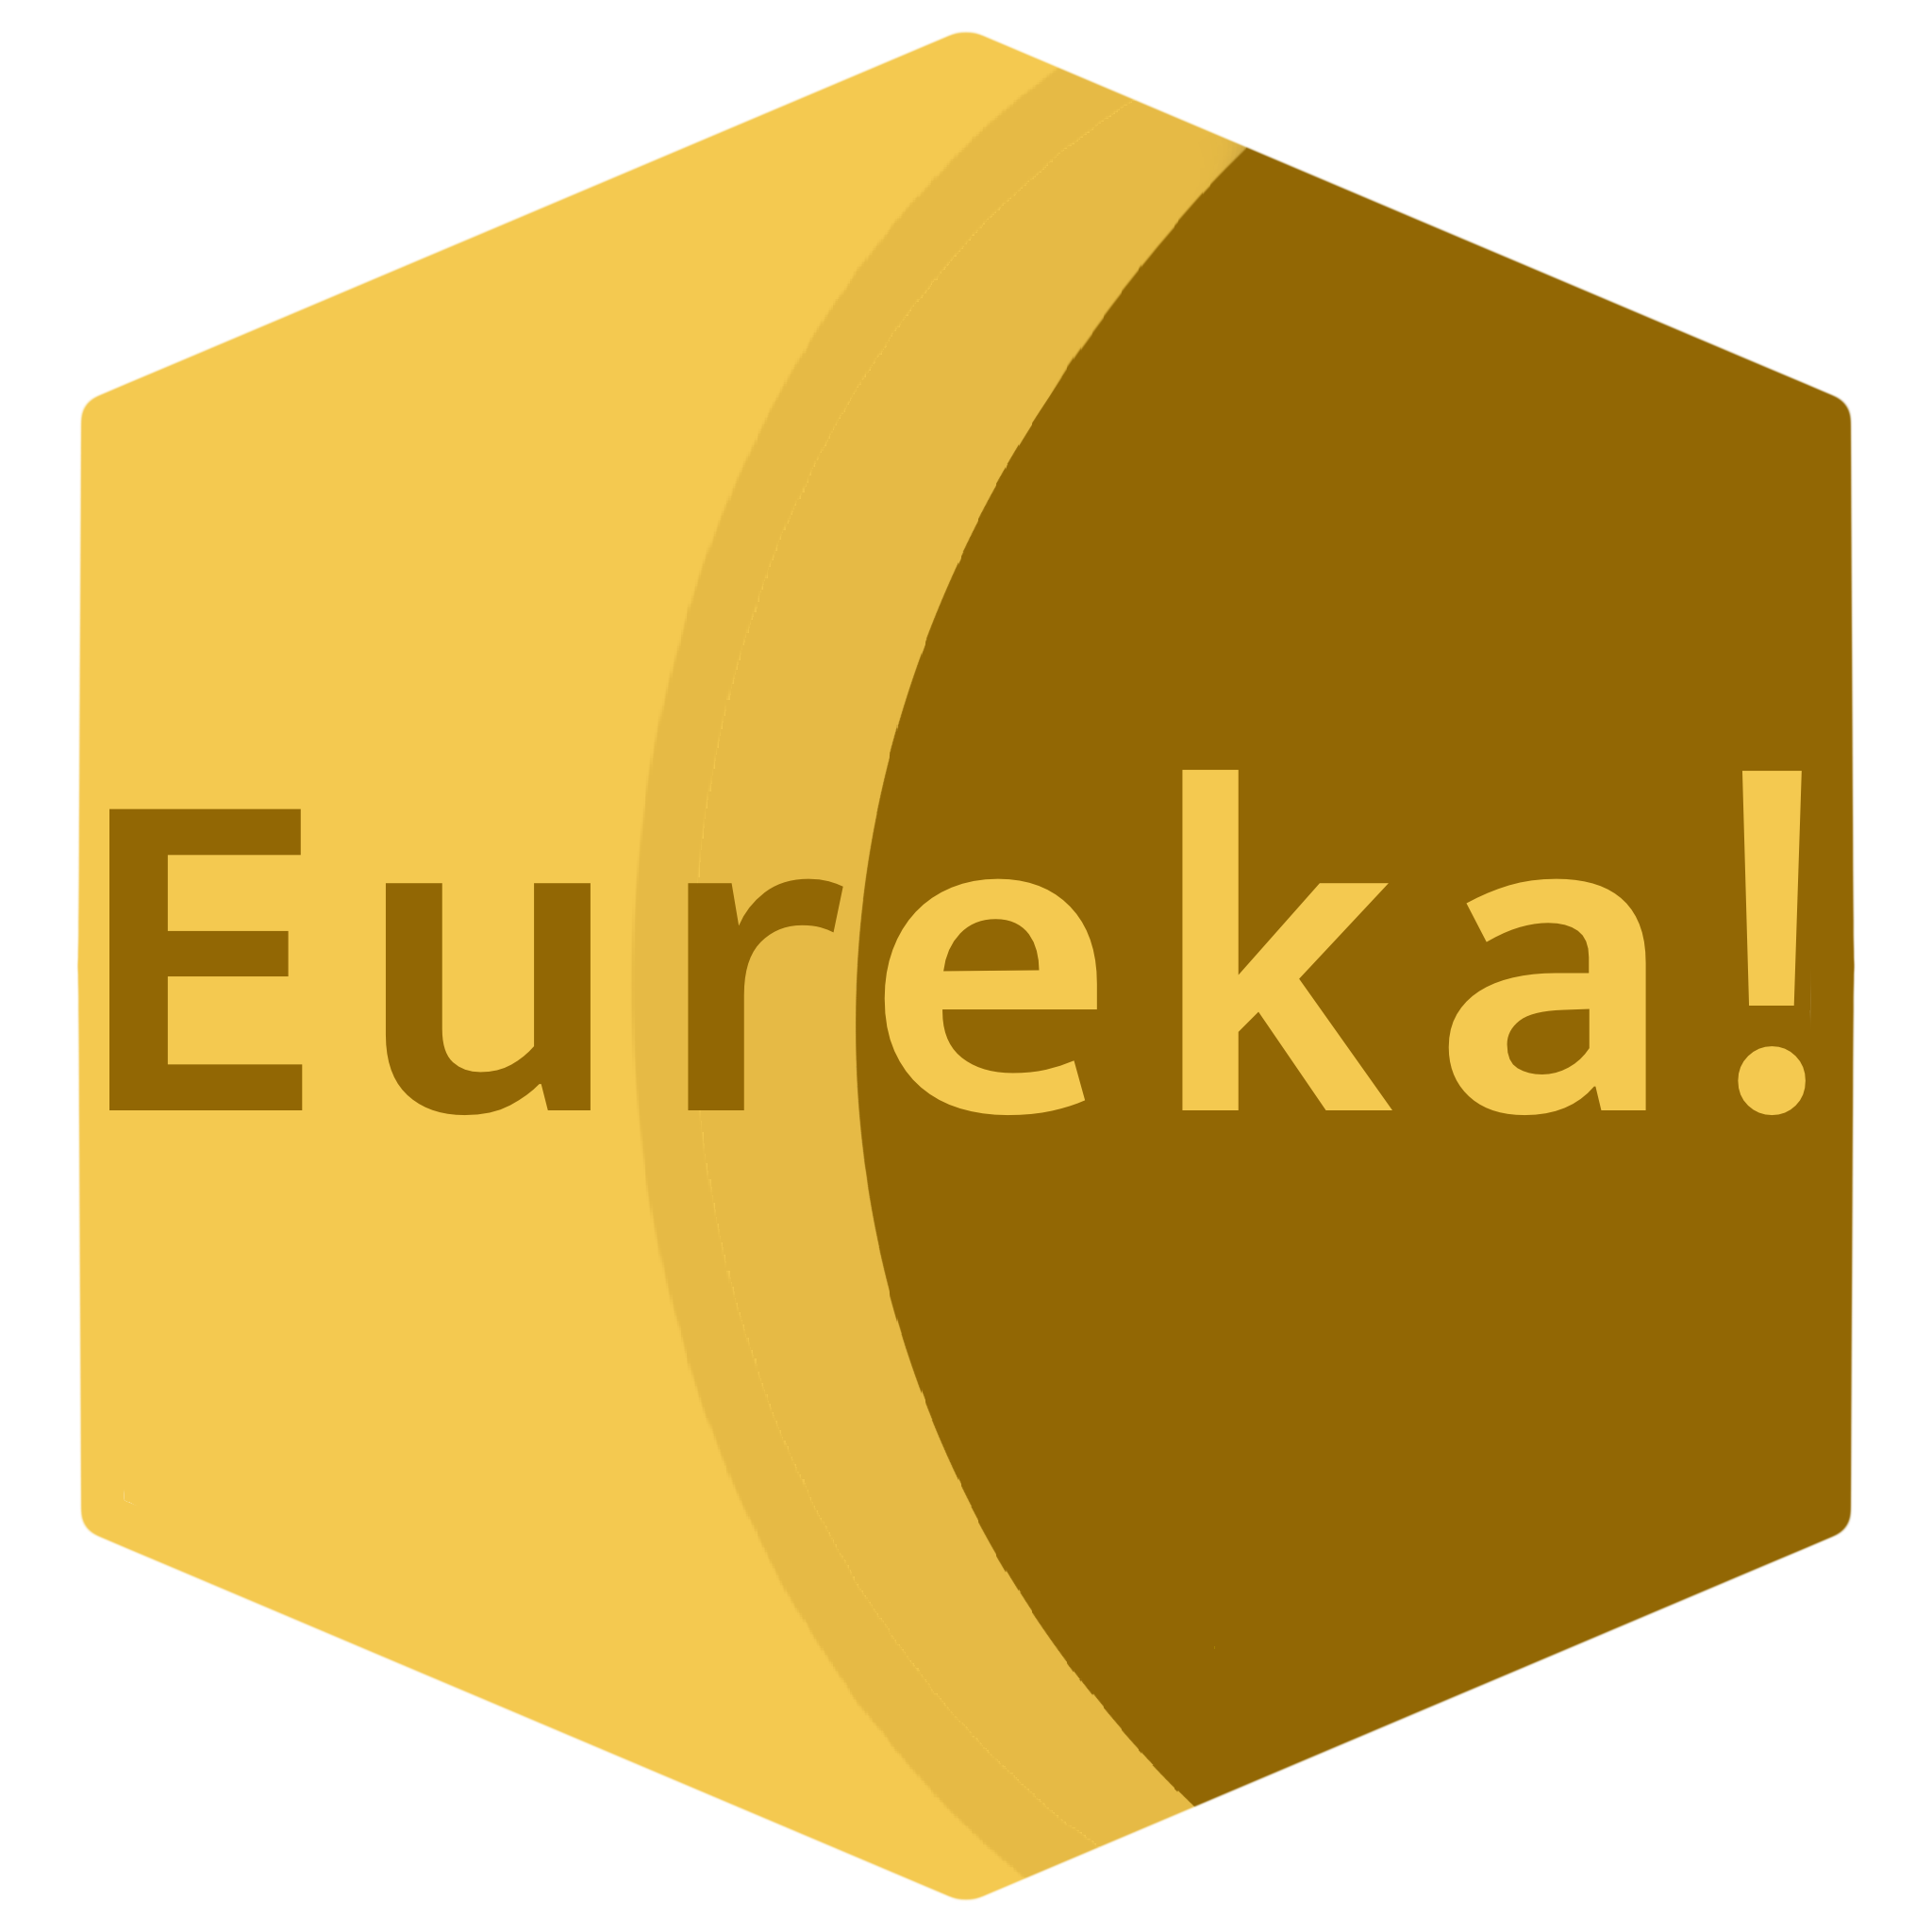 eureka collaboration sticker